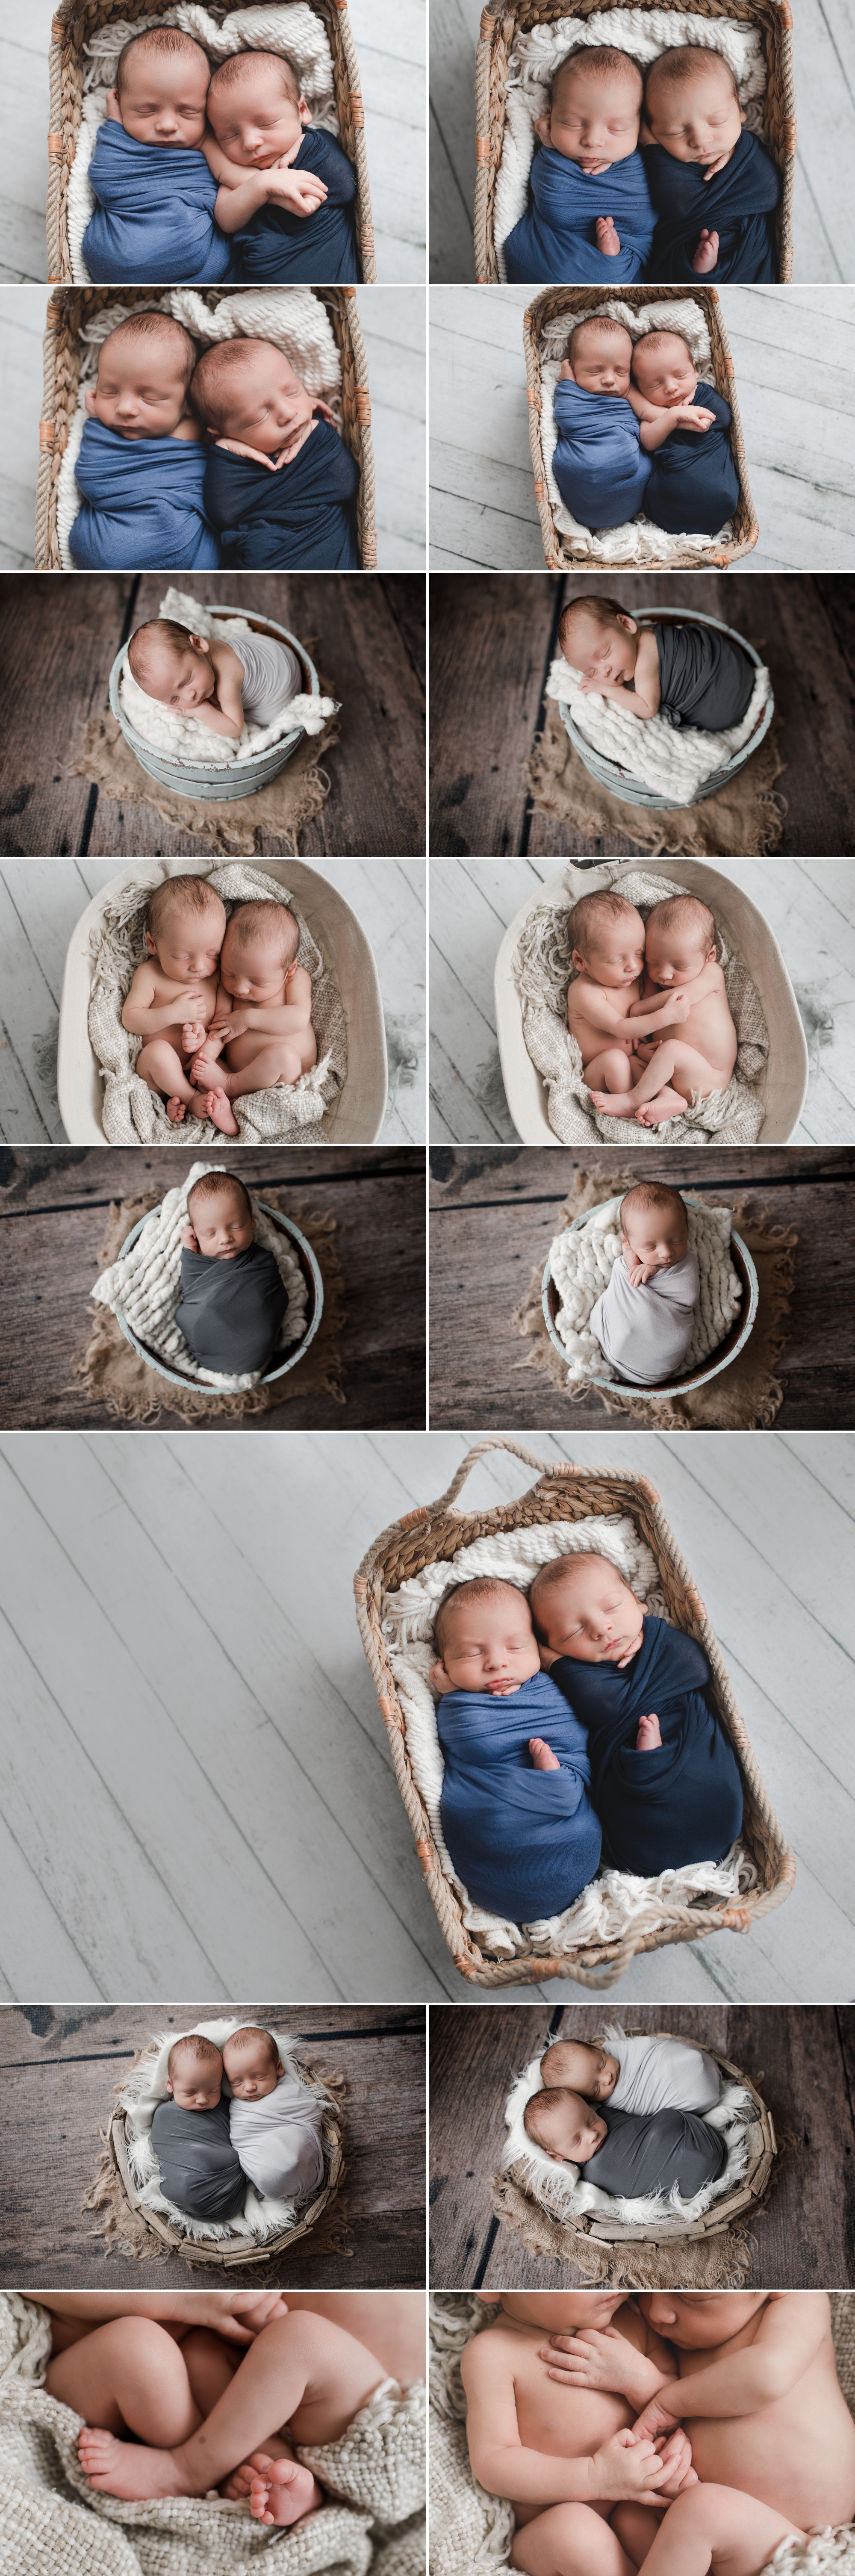 newborn twin boys photographer dana marquart photogenics on location washmo